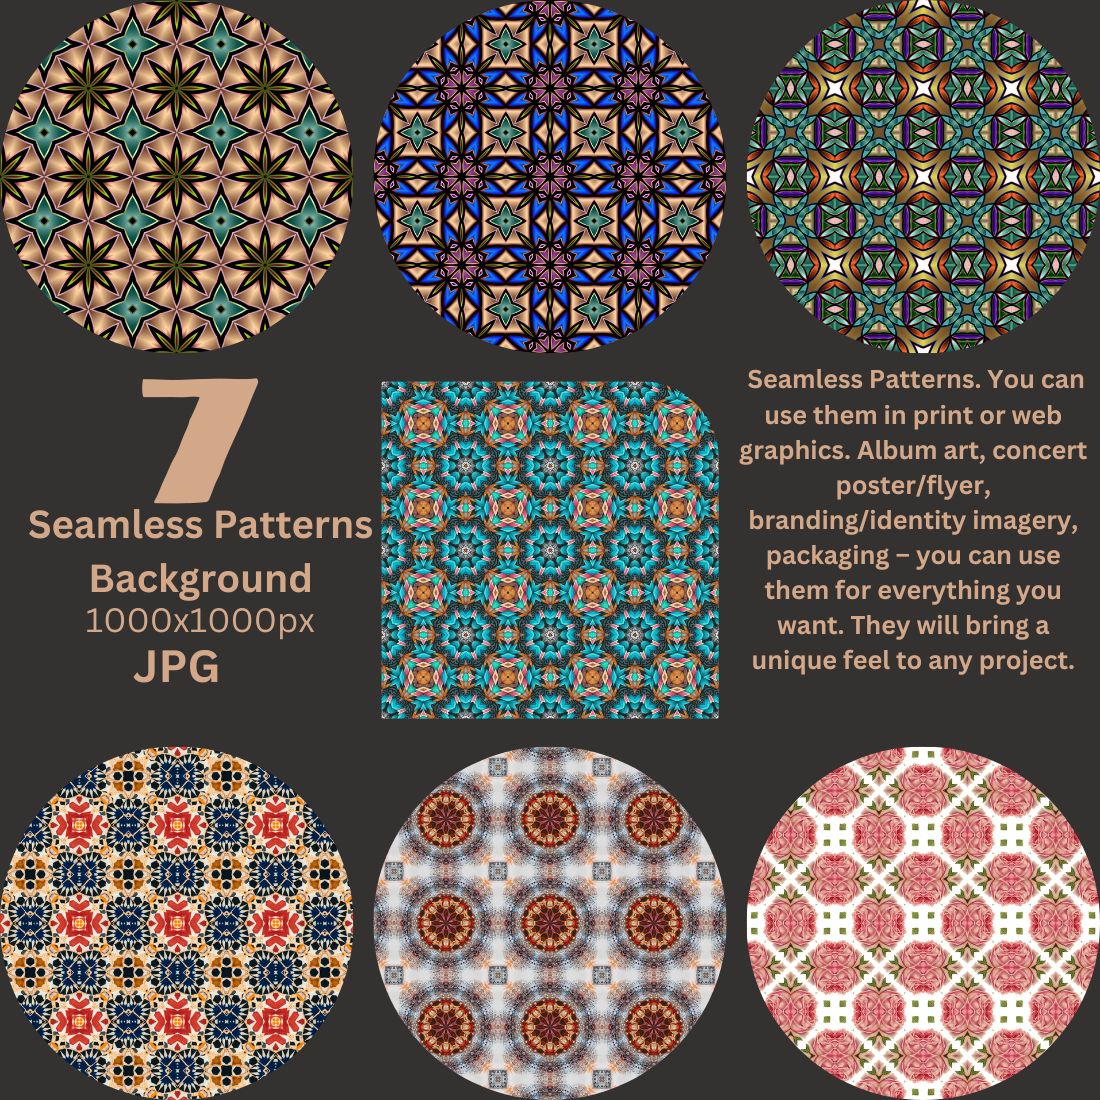 7 Seamless Patterns Background created by nawazkakkal.